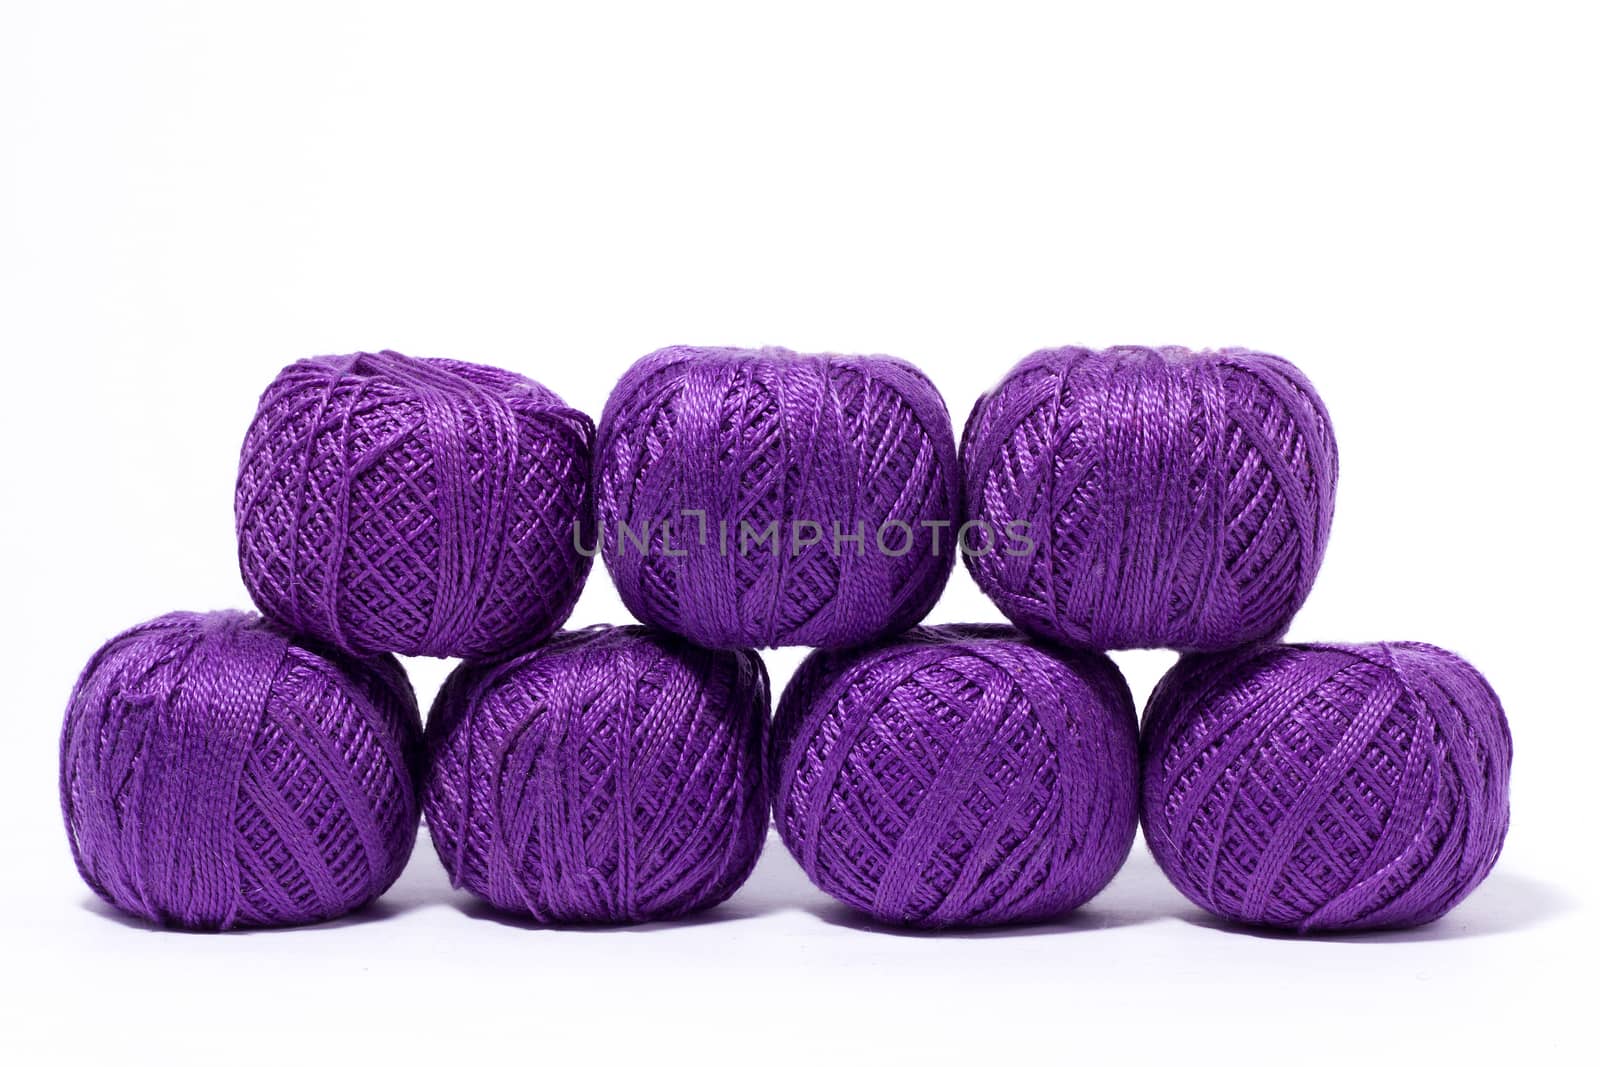 a ball of yellow knitting yarn, isolate, homemade handicrafts, woolen yarn